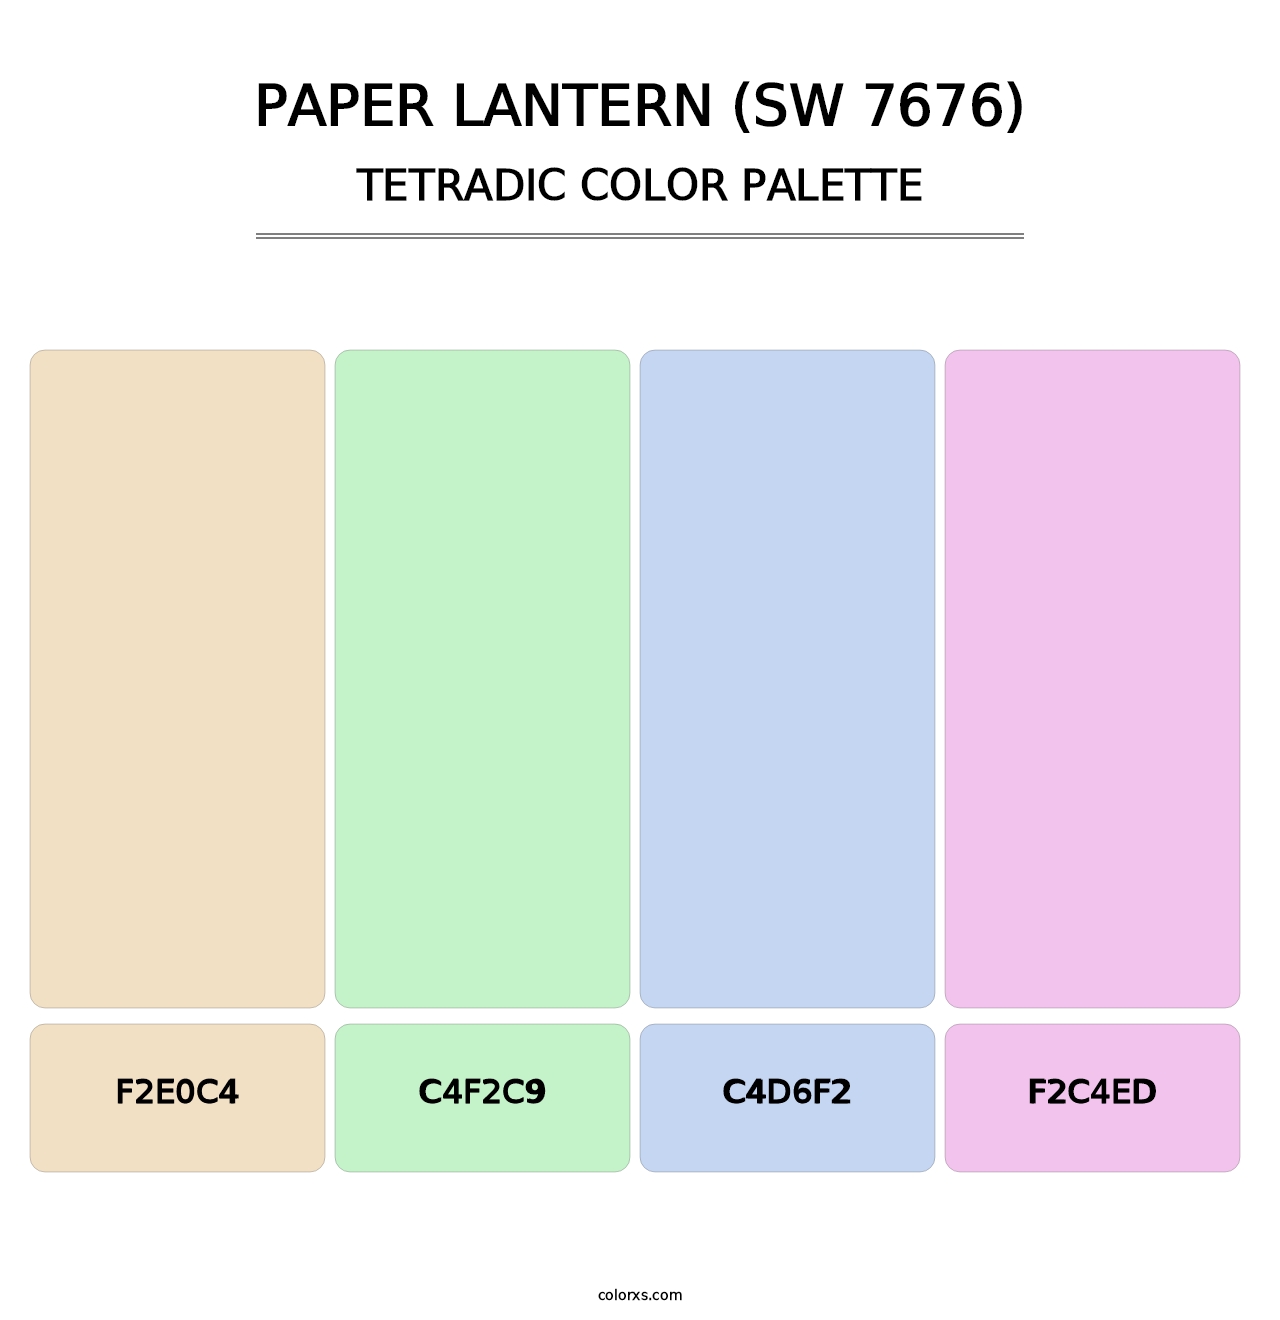 Paper Lantern (SW 7676) - Tetradic Color Palette